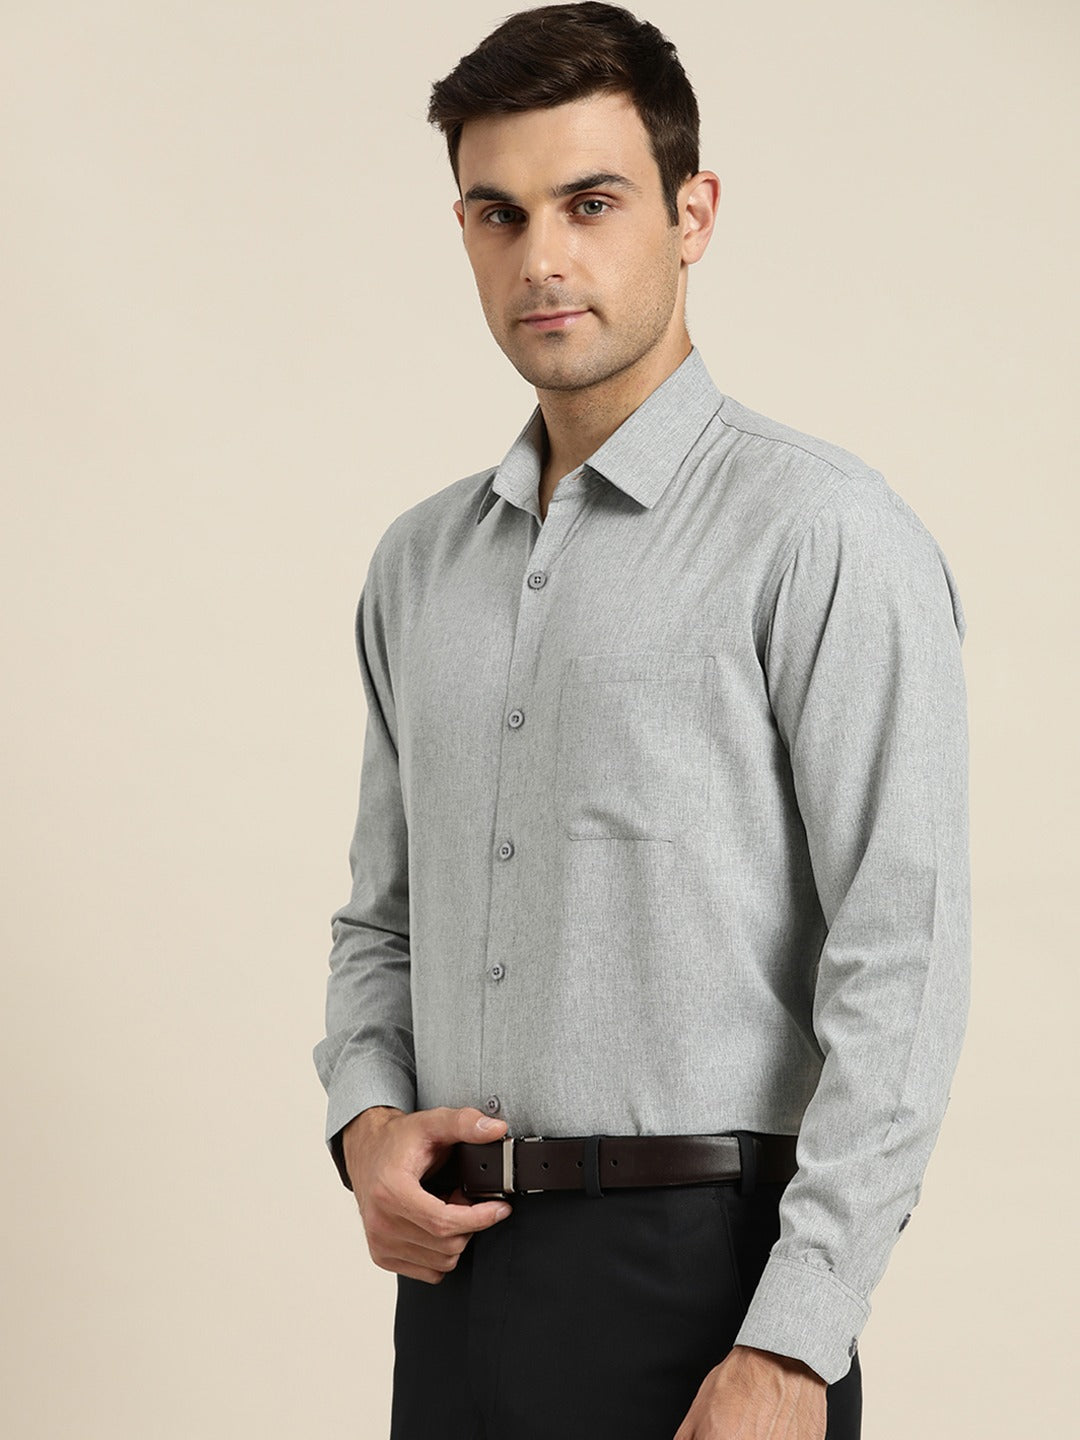 Men's Cotton Grey Casual Shirt